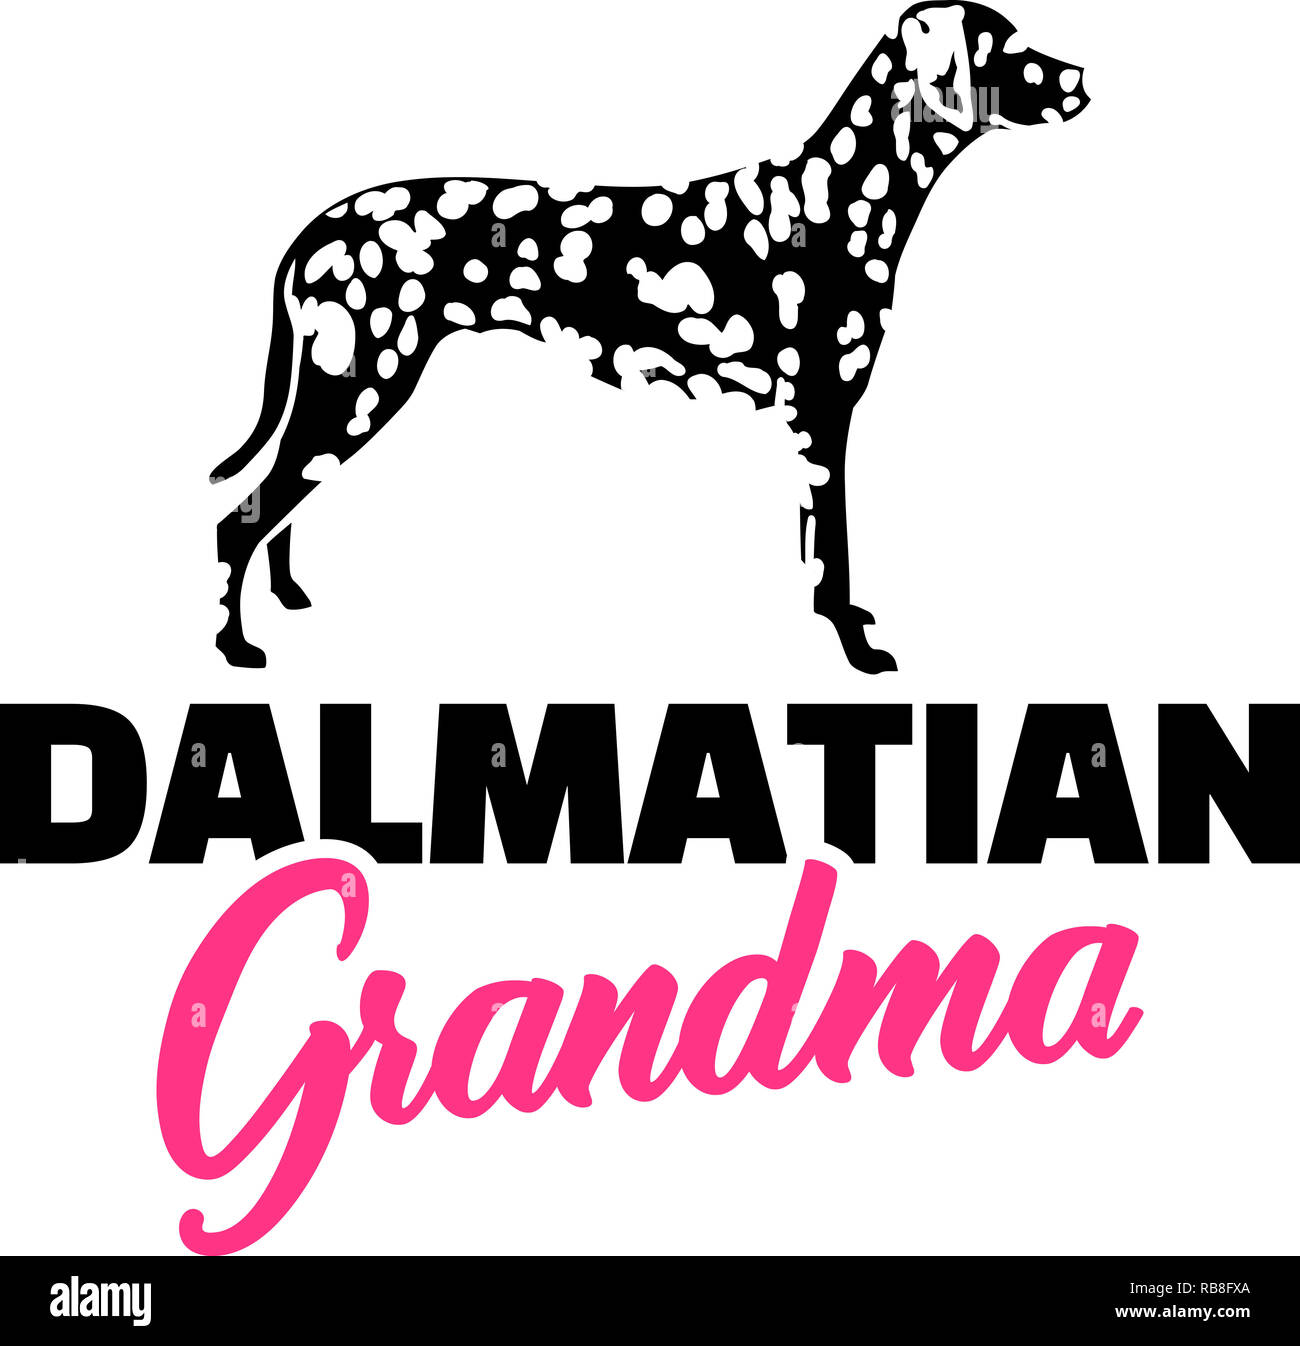 Dalmatian Grandma silhouette pink word Stock Photo